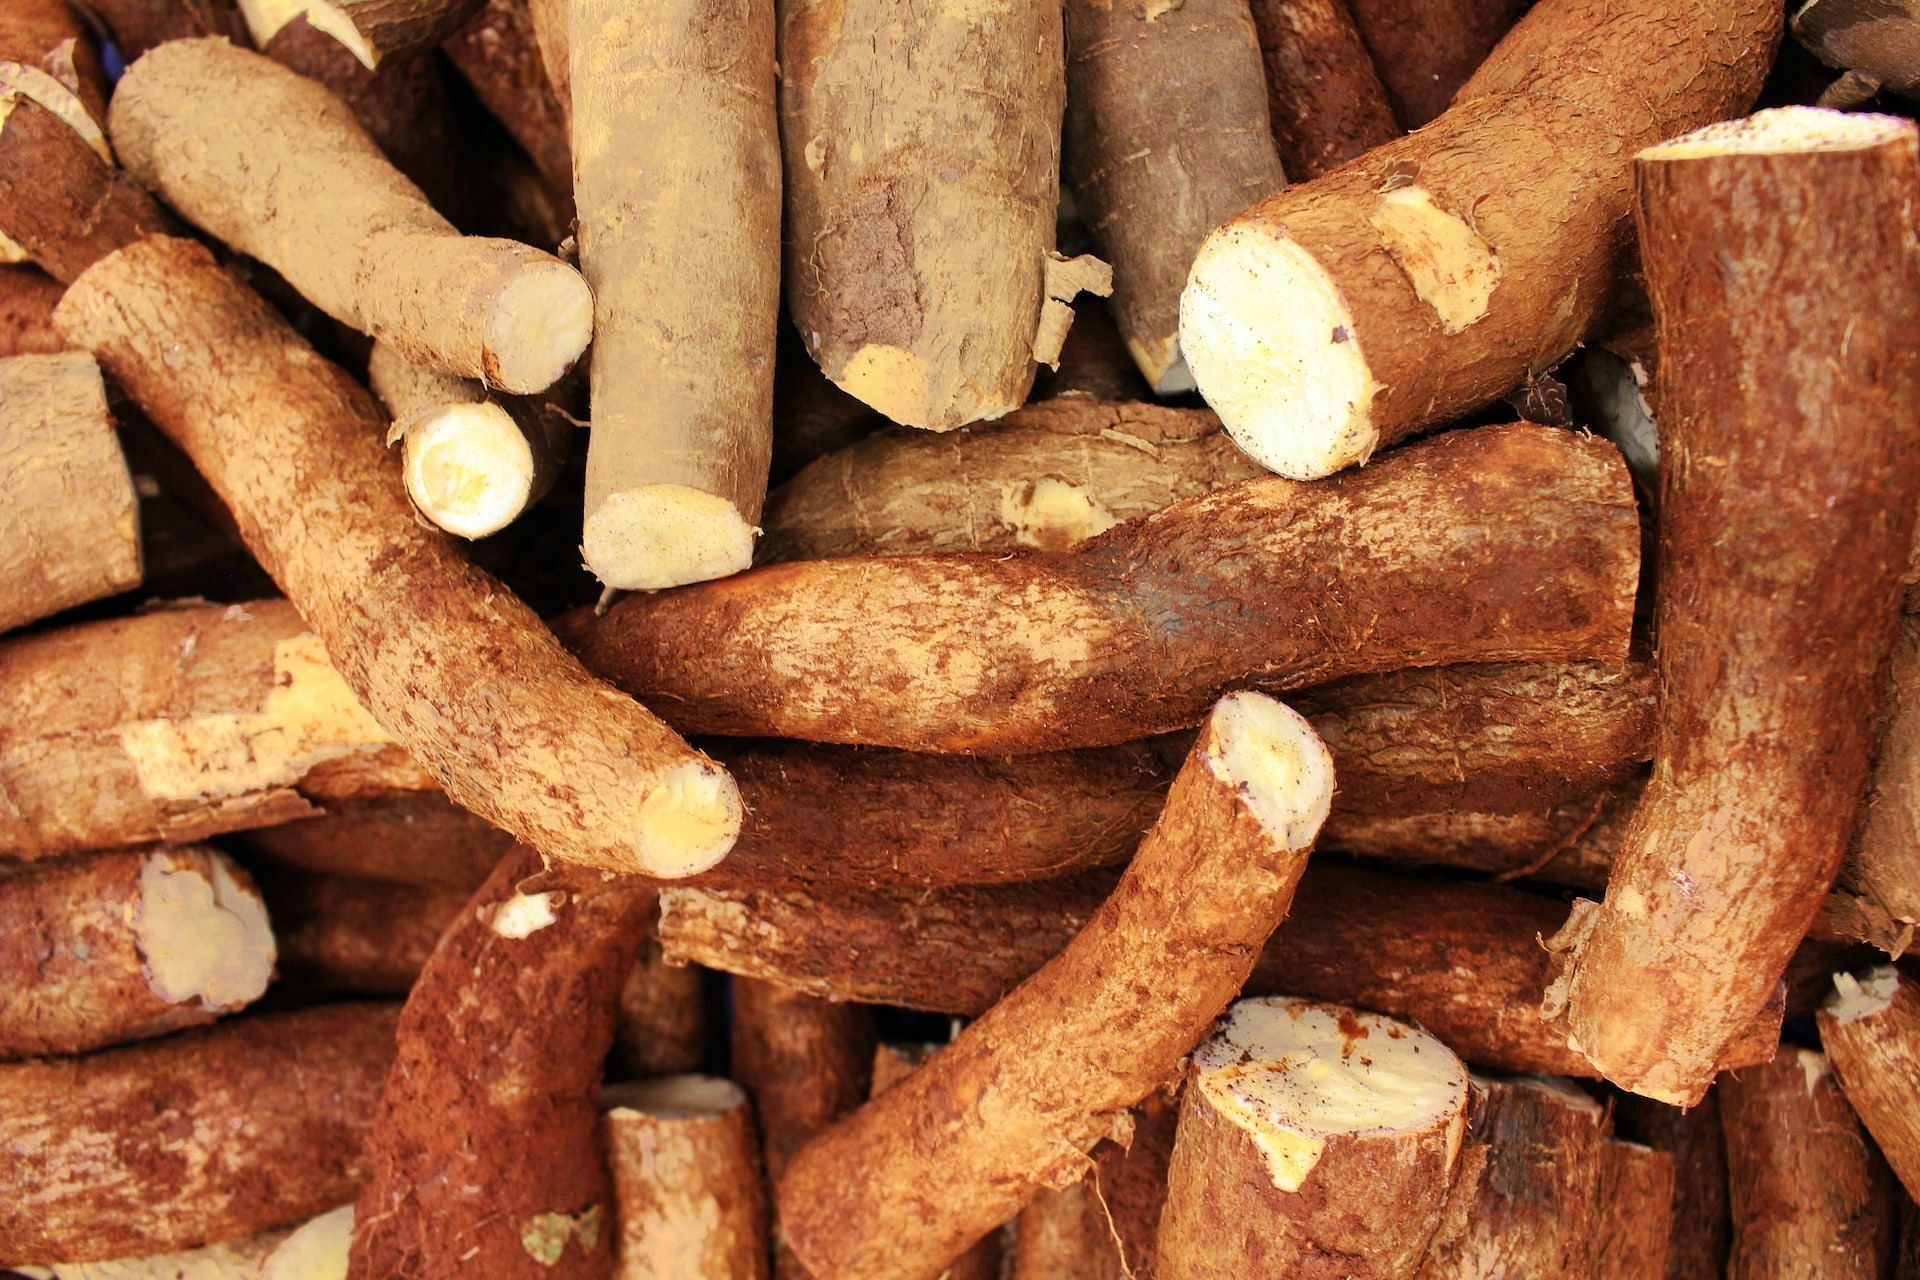 Cassava contains niacin, vitamin B6, and more. (Image via Pexels/Daniel Dan)